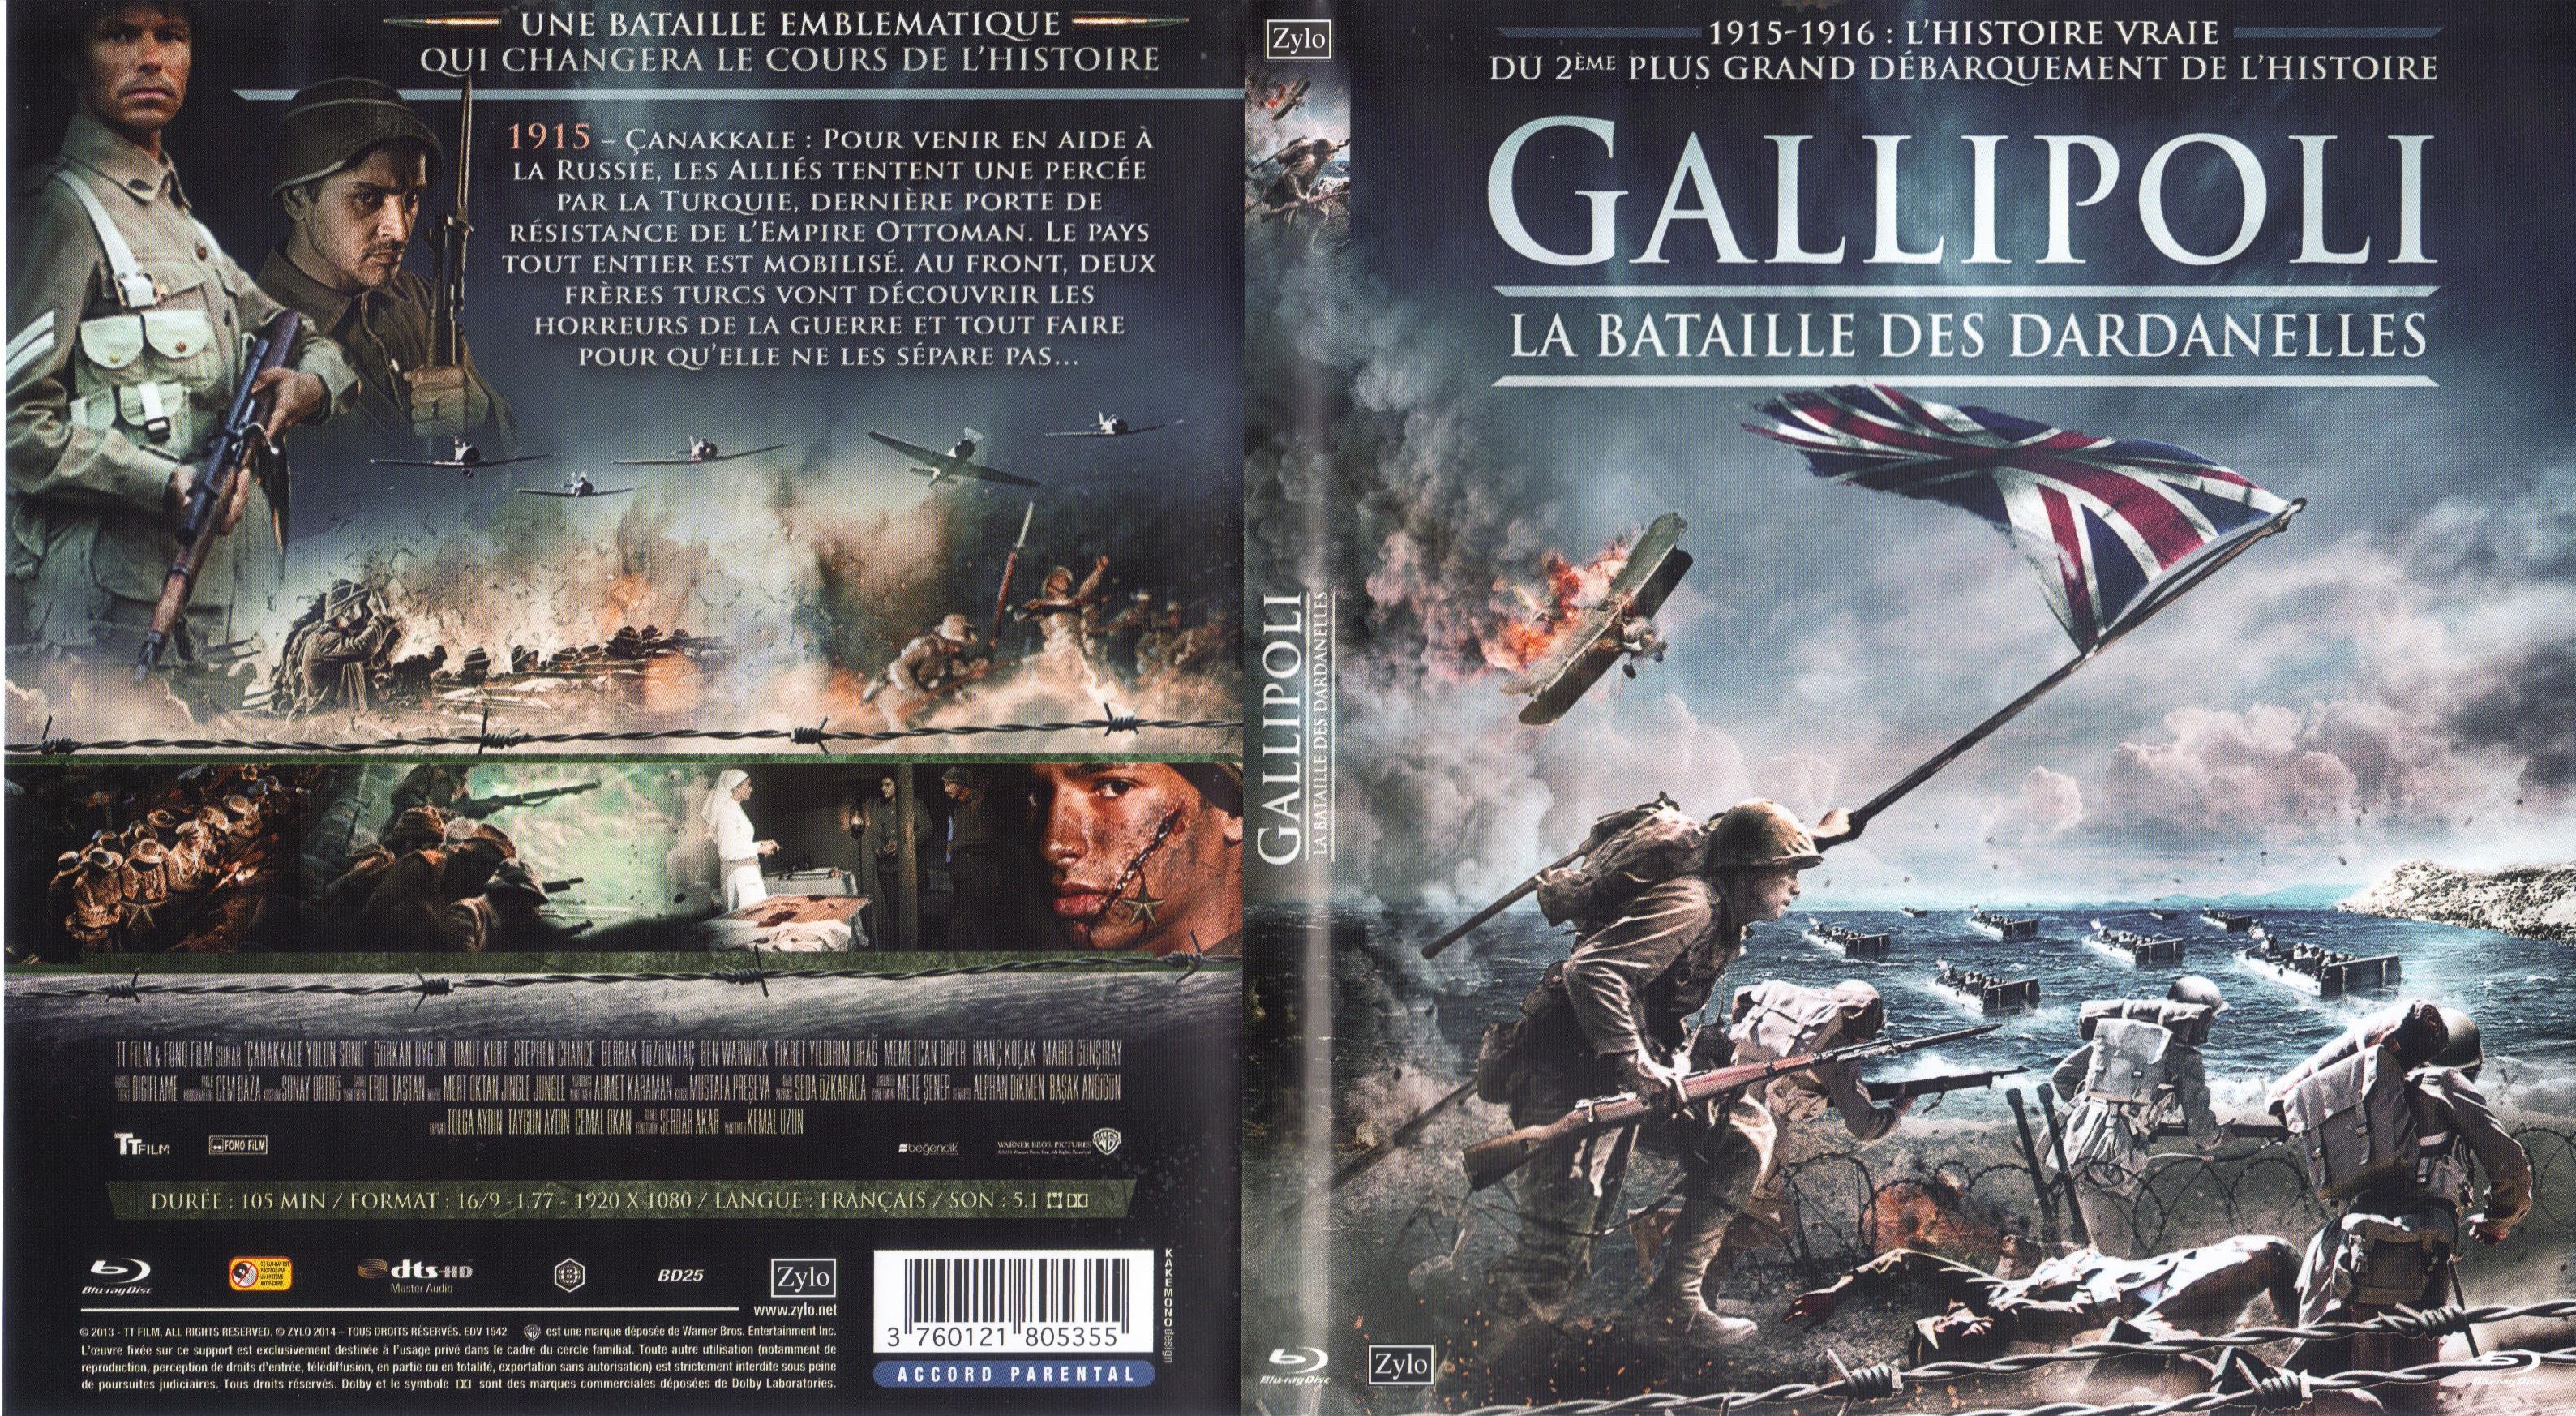 Jaquette DVD Gallipoli La bataille des dardanelles (BLU-RAY)